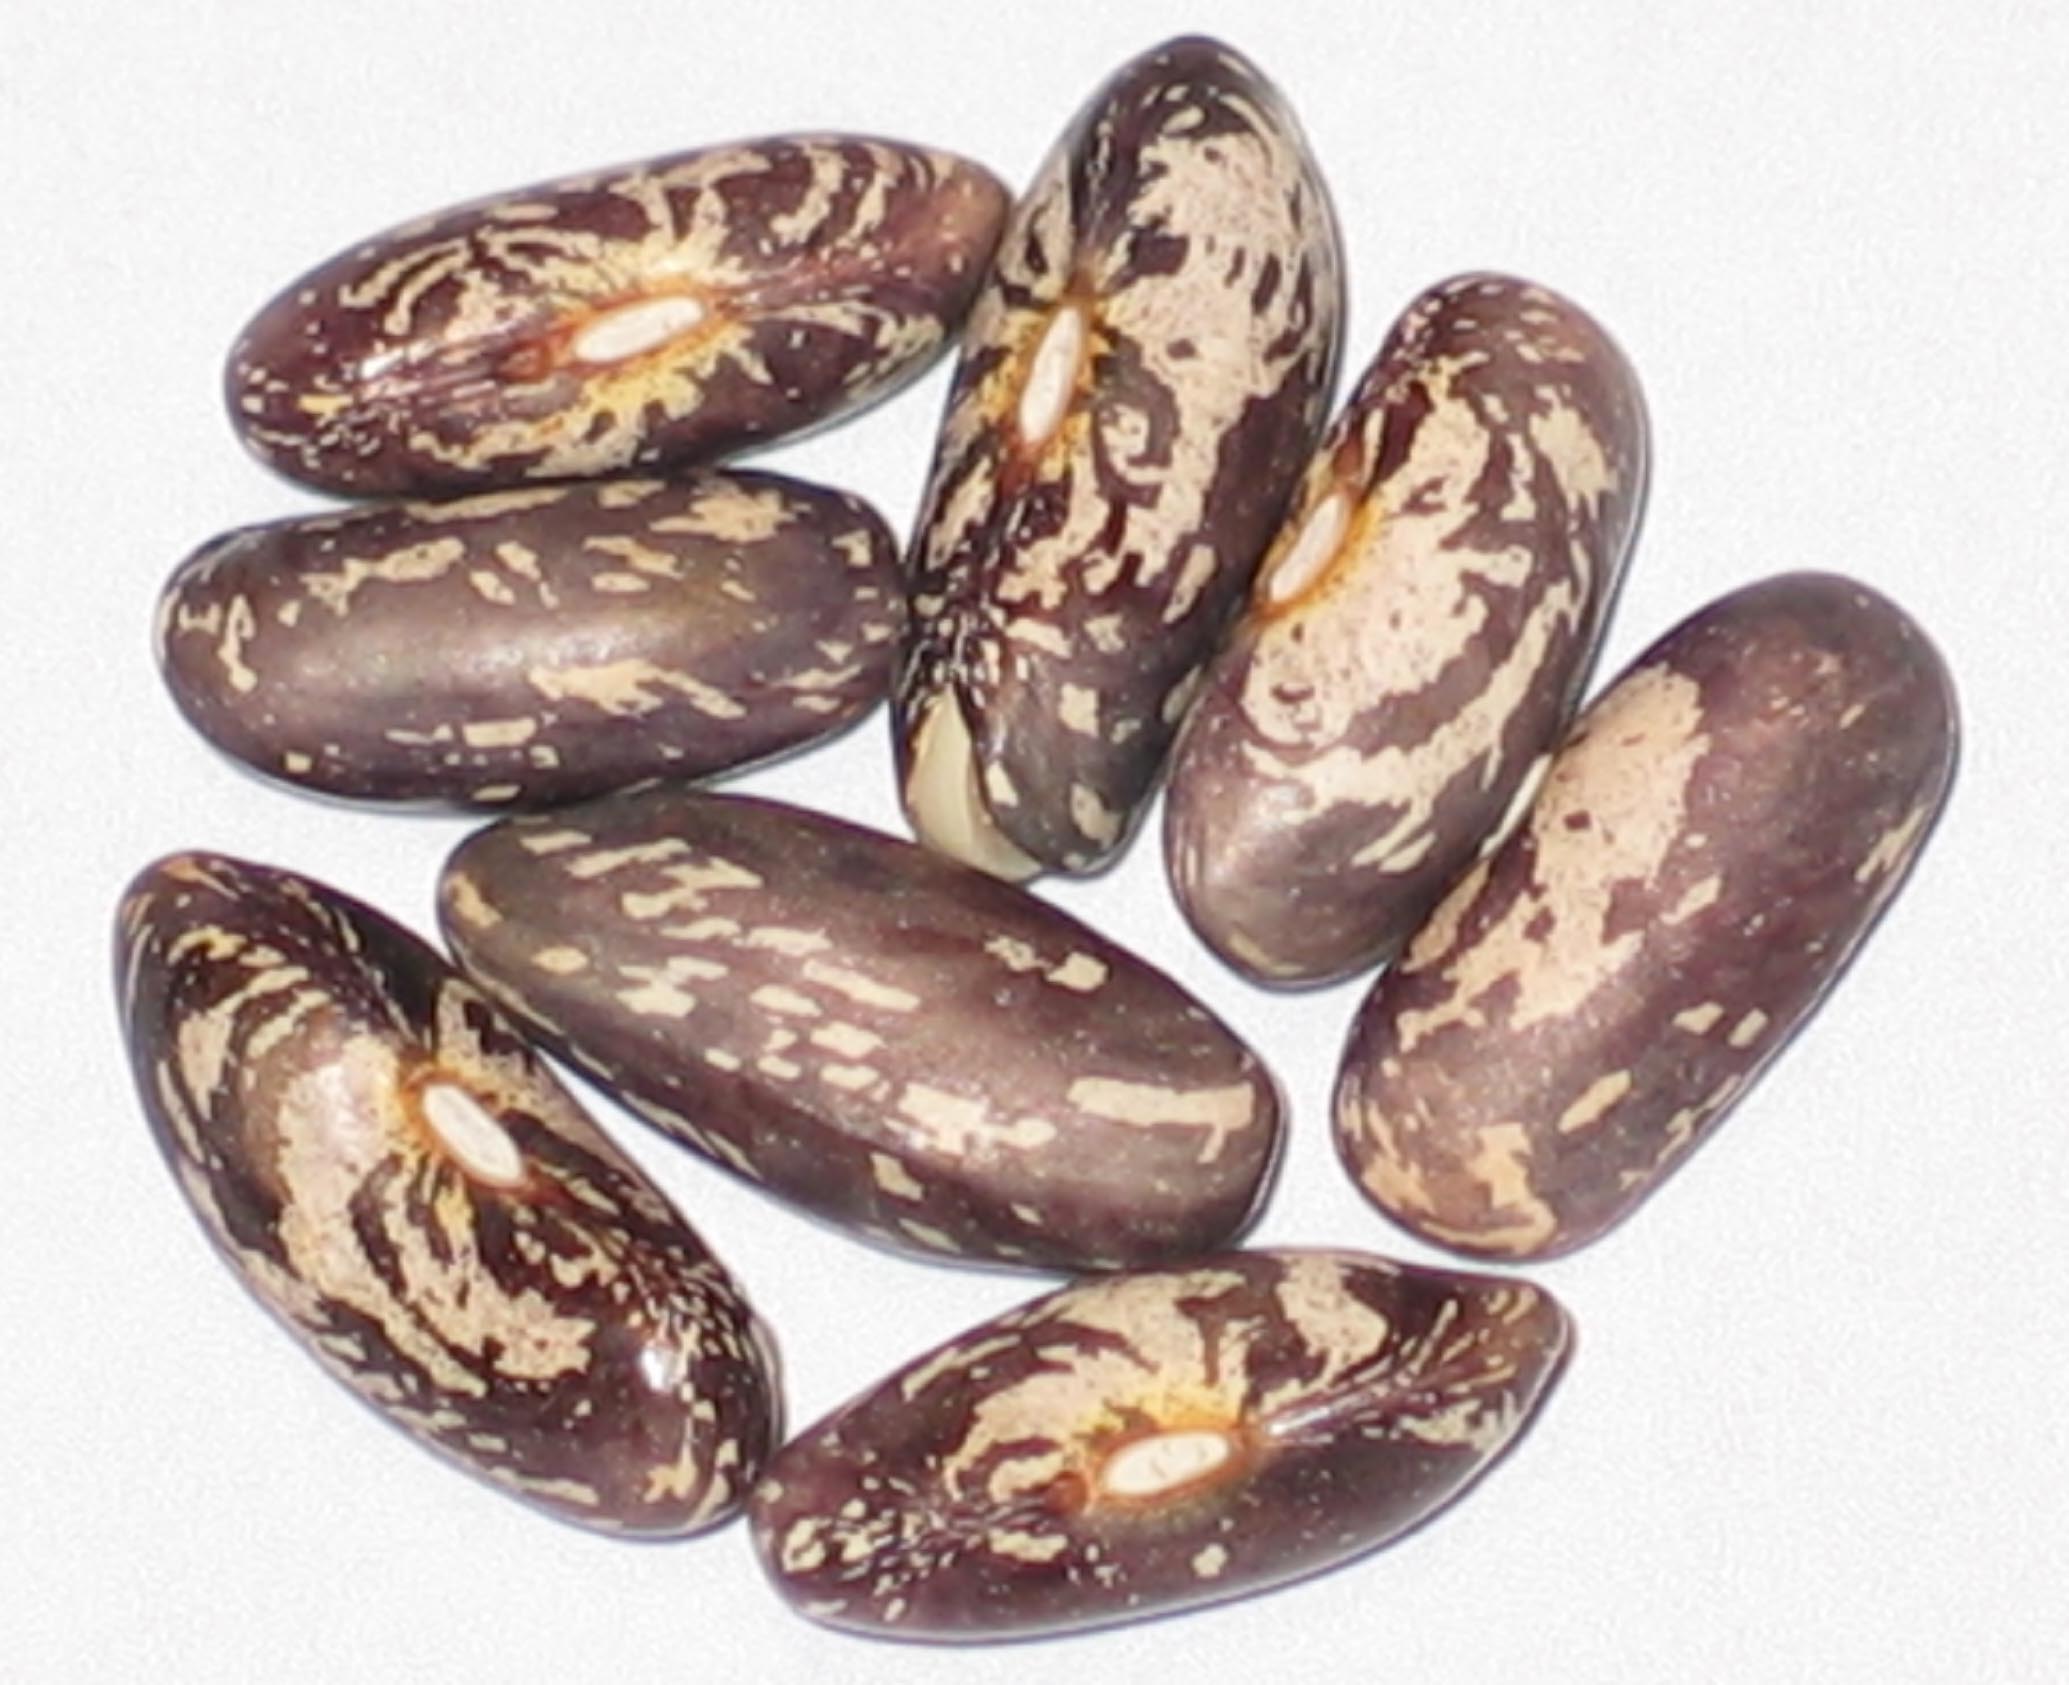 image of Seminole beans